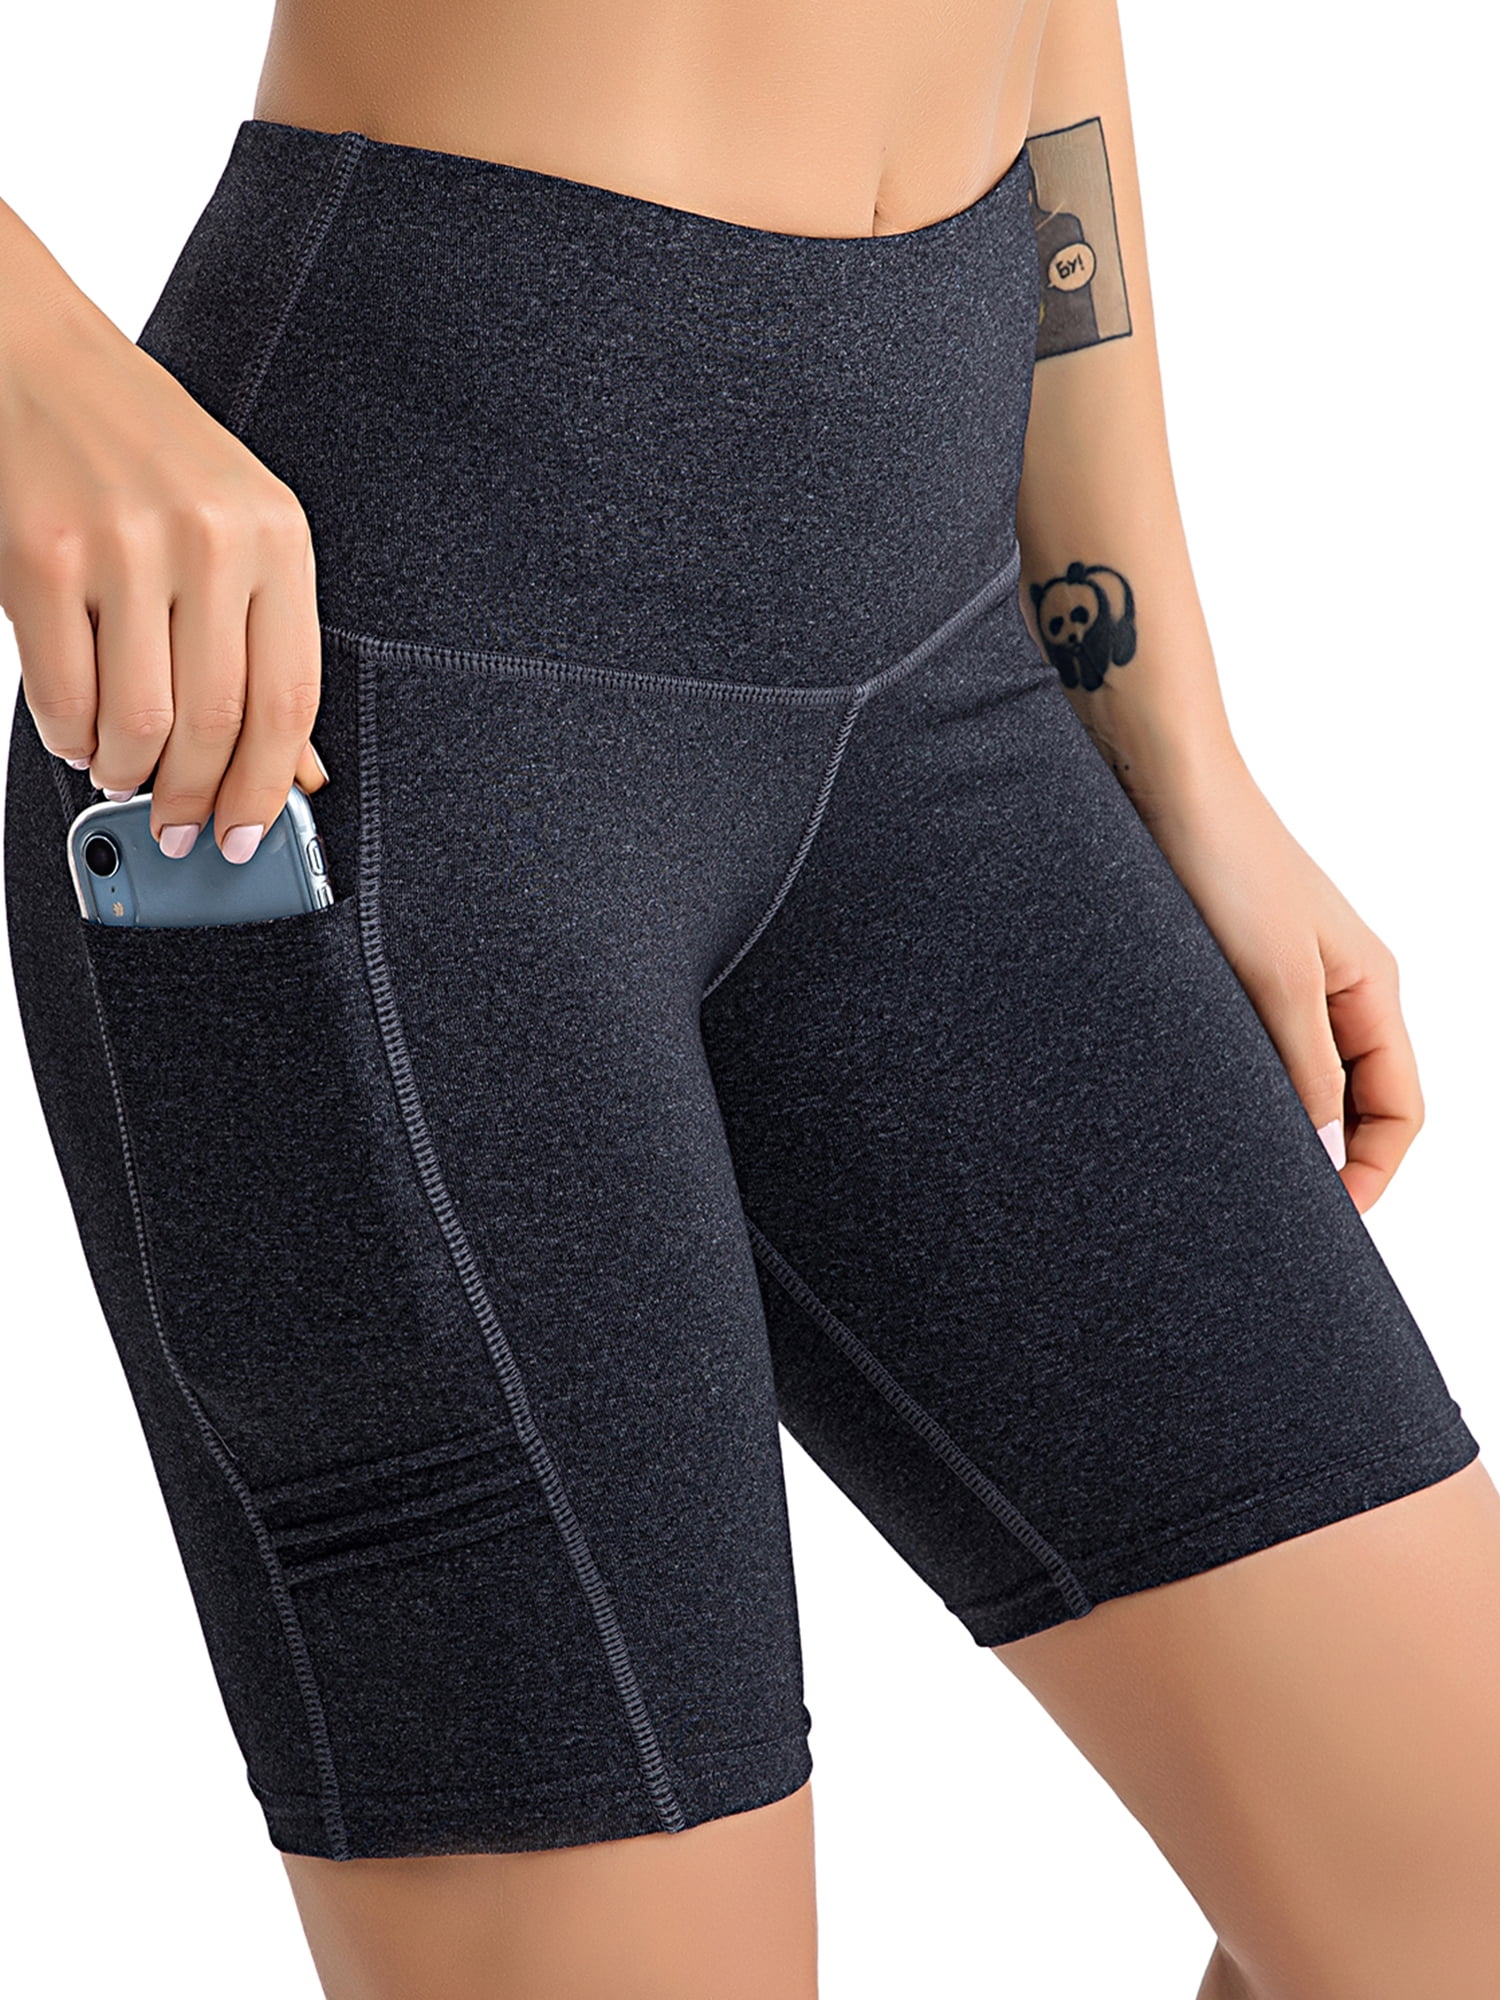 iooho Womens 8 High Waist Yoga Shorts Cotton Compression Workout Bike Shorts Side Pockets Biker Shorts 